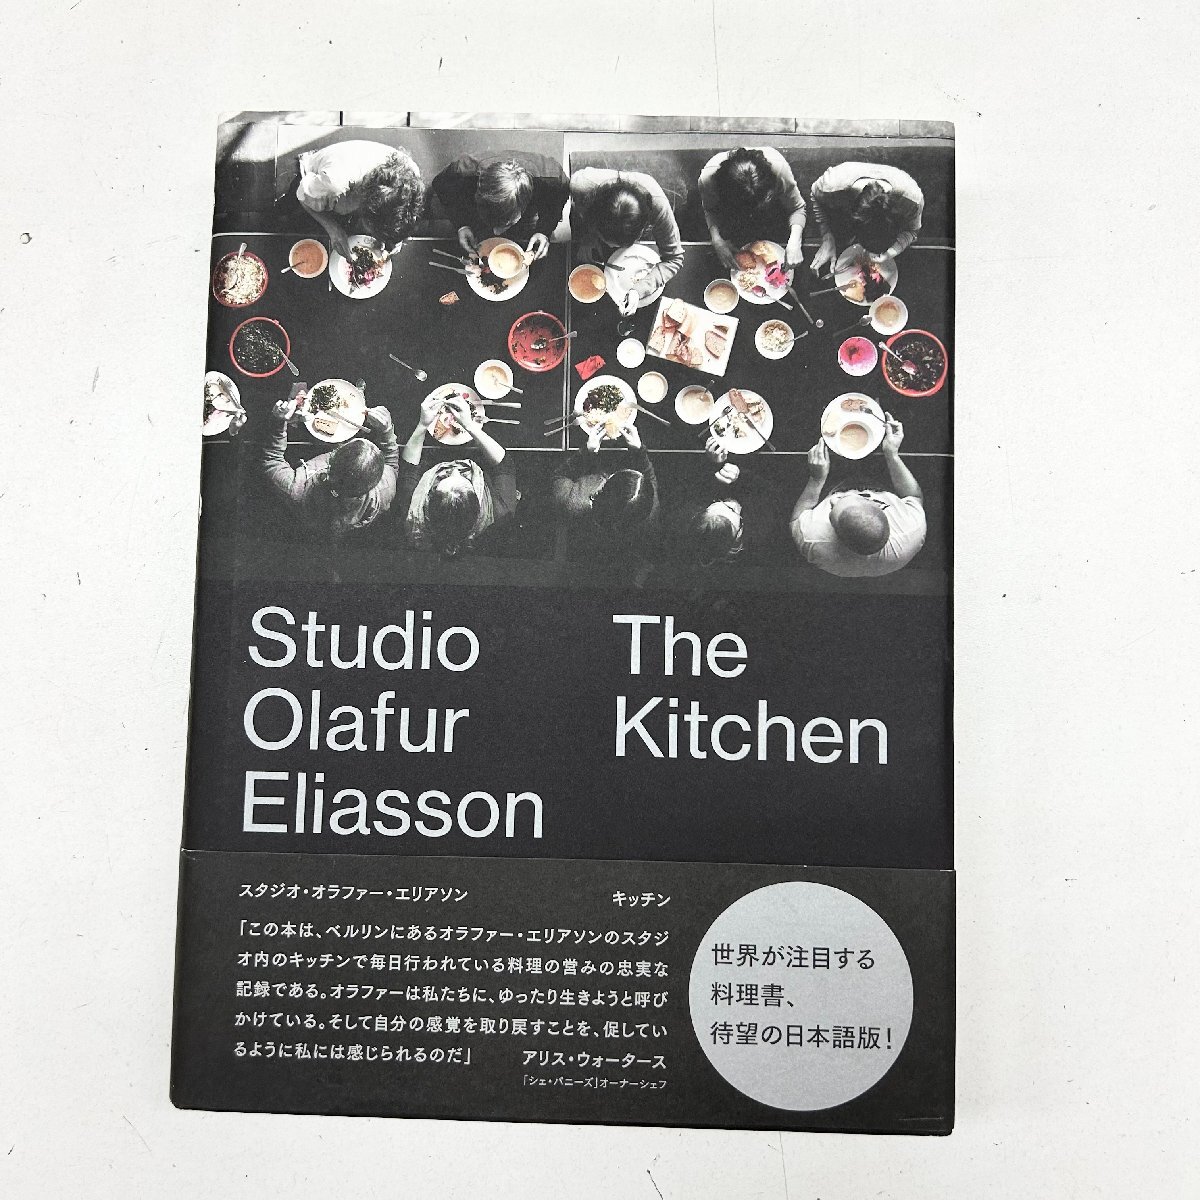 ◆The Kitchen◆Studio Olafur Eliasson スタジオ オラファー エリアソン キッチン 美術出版社 帯付 初版本 日本語版 料理本 レシピ 料理書_画像2